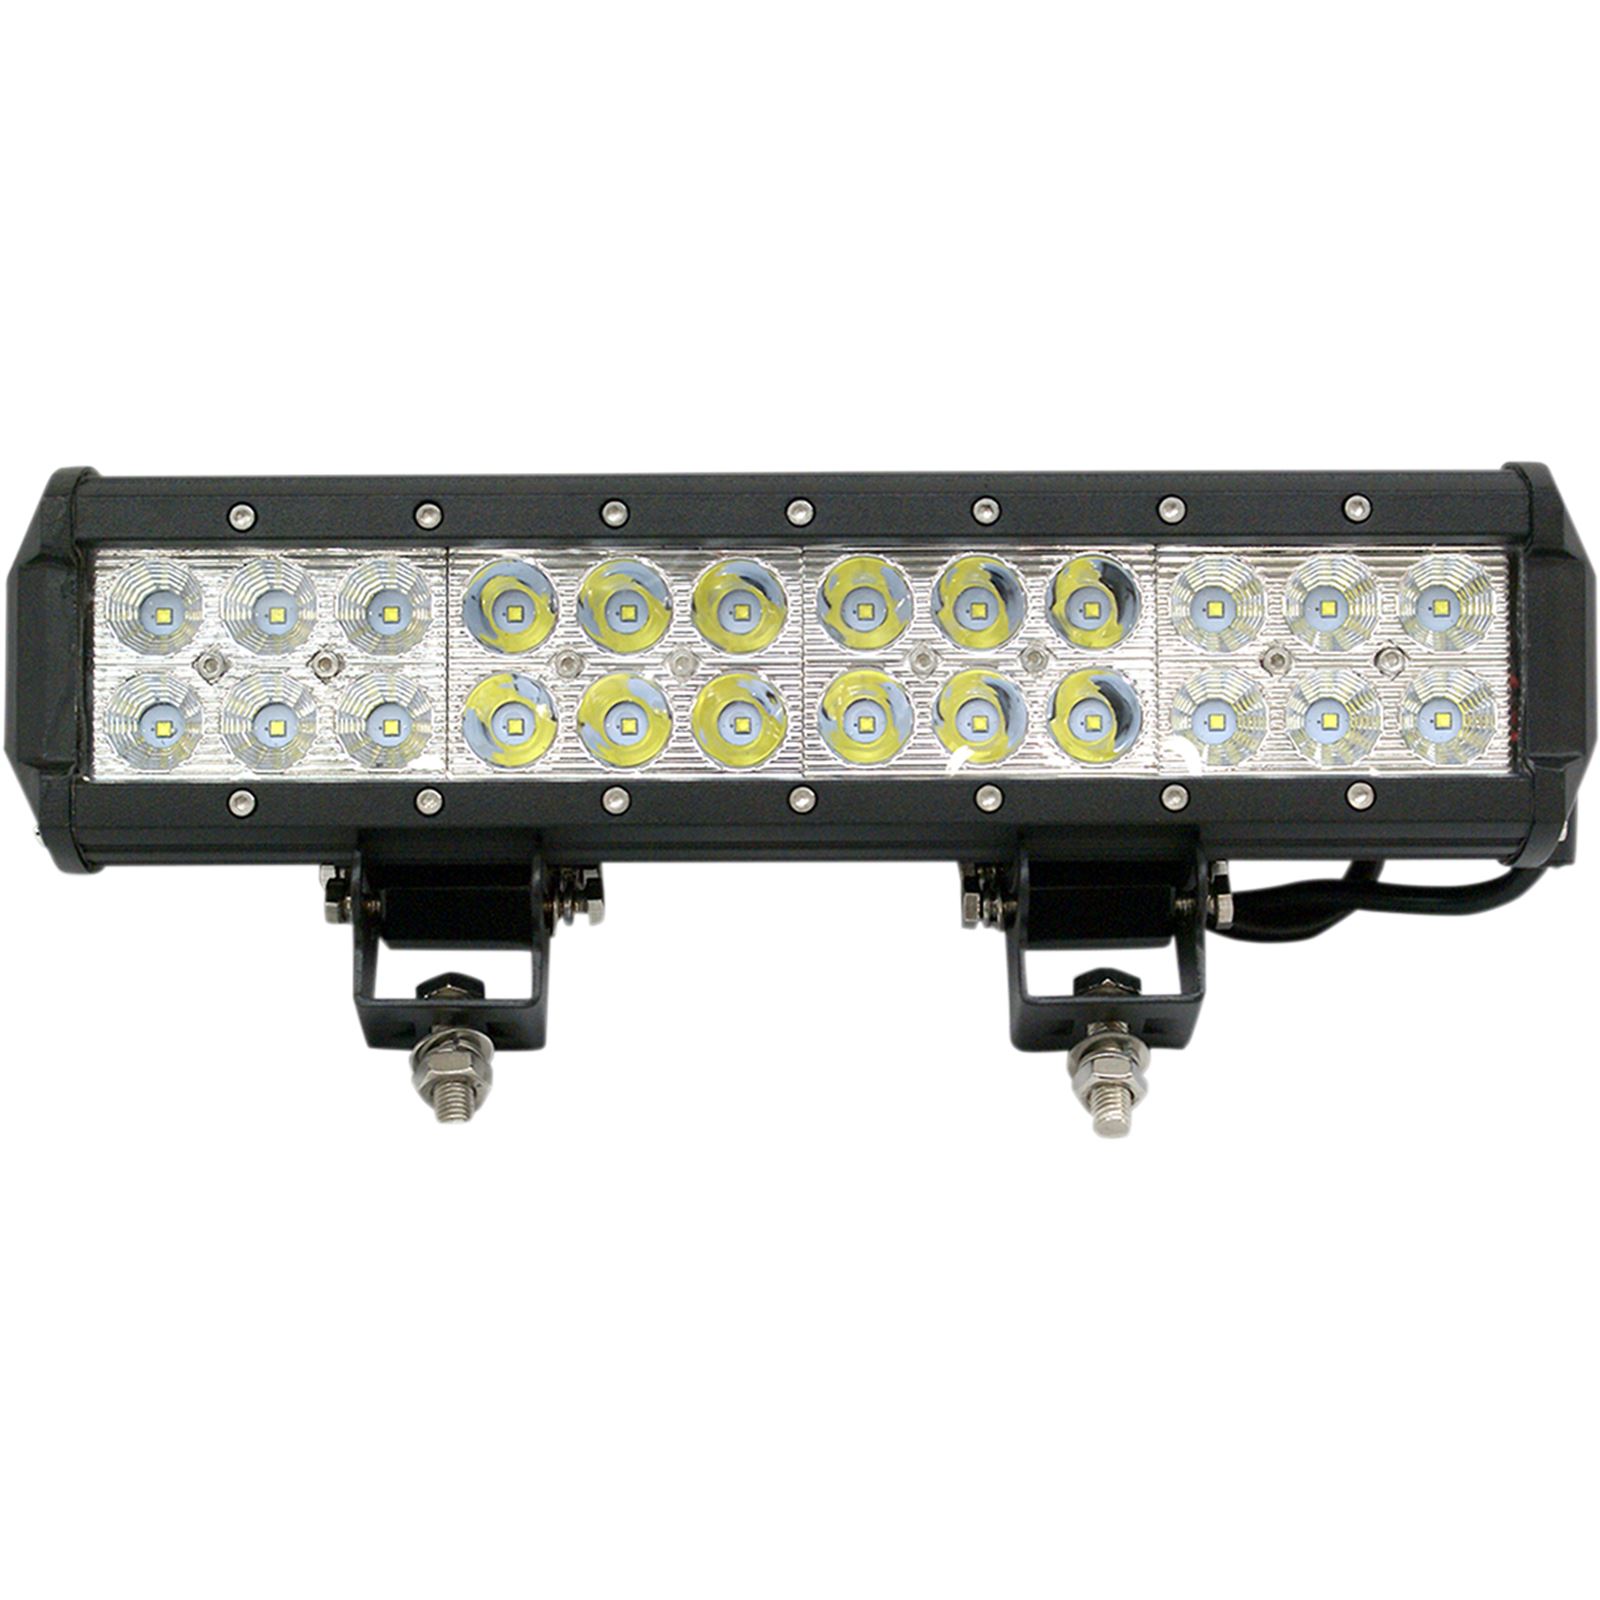 Rivco Products 12" LED Light Bar